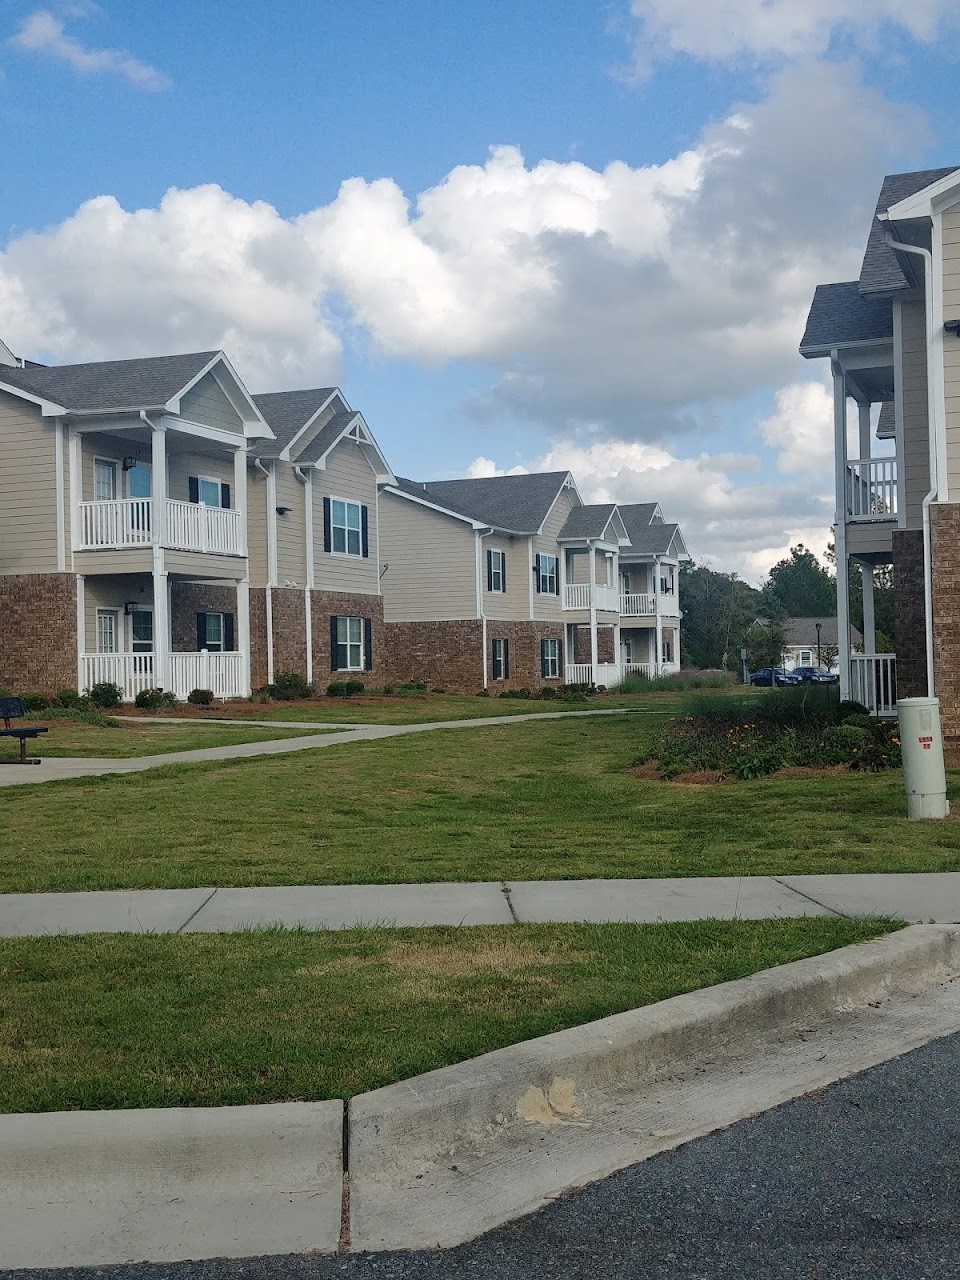 Photo of EUREKA HEIGHTS. Affordable housing located at 1060 W WASHINGTON AVE ASHBURN, GA 31714